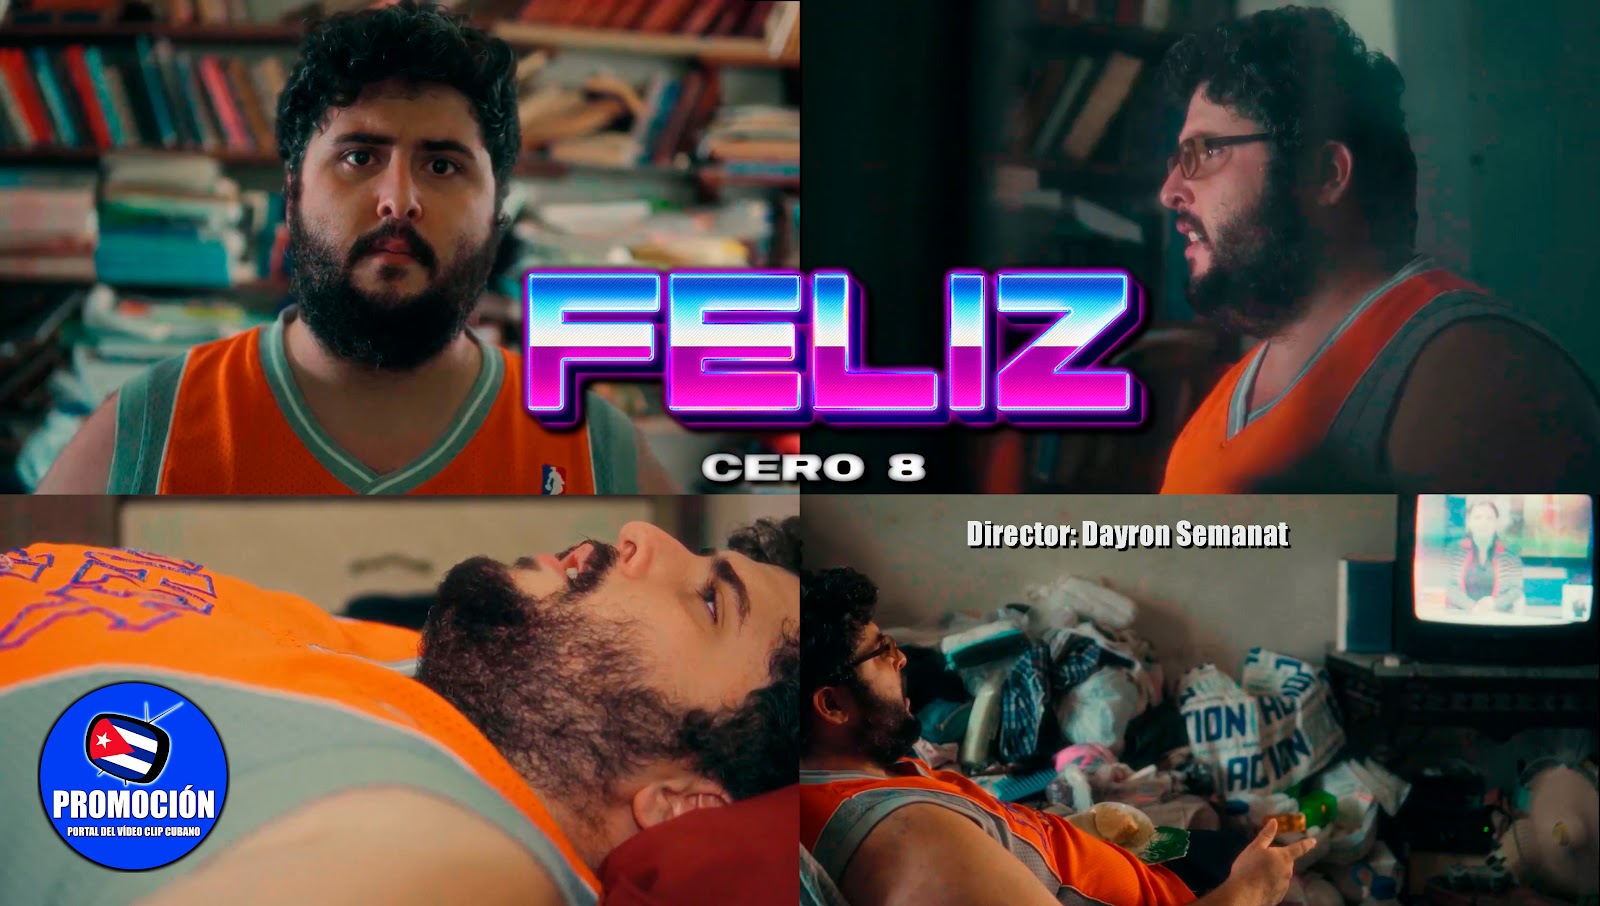 Cero Ocho - ¨FELIZ¨ - Director: Dayron Semanat. Portal Del Vídeo Clip Cubano. Música urbana cubana. CUBA.